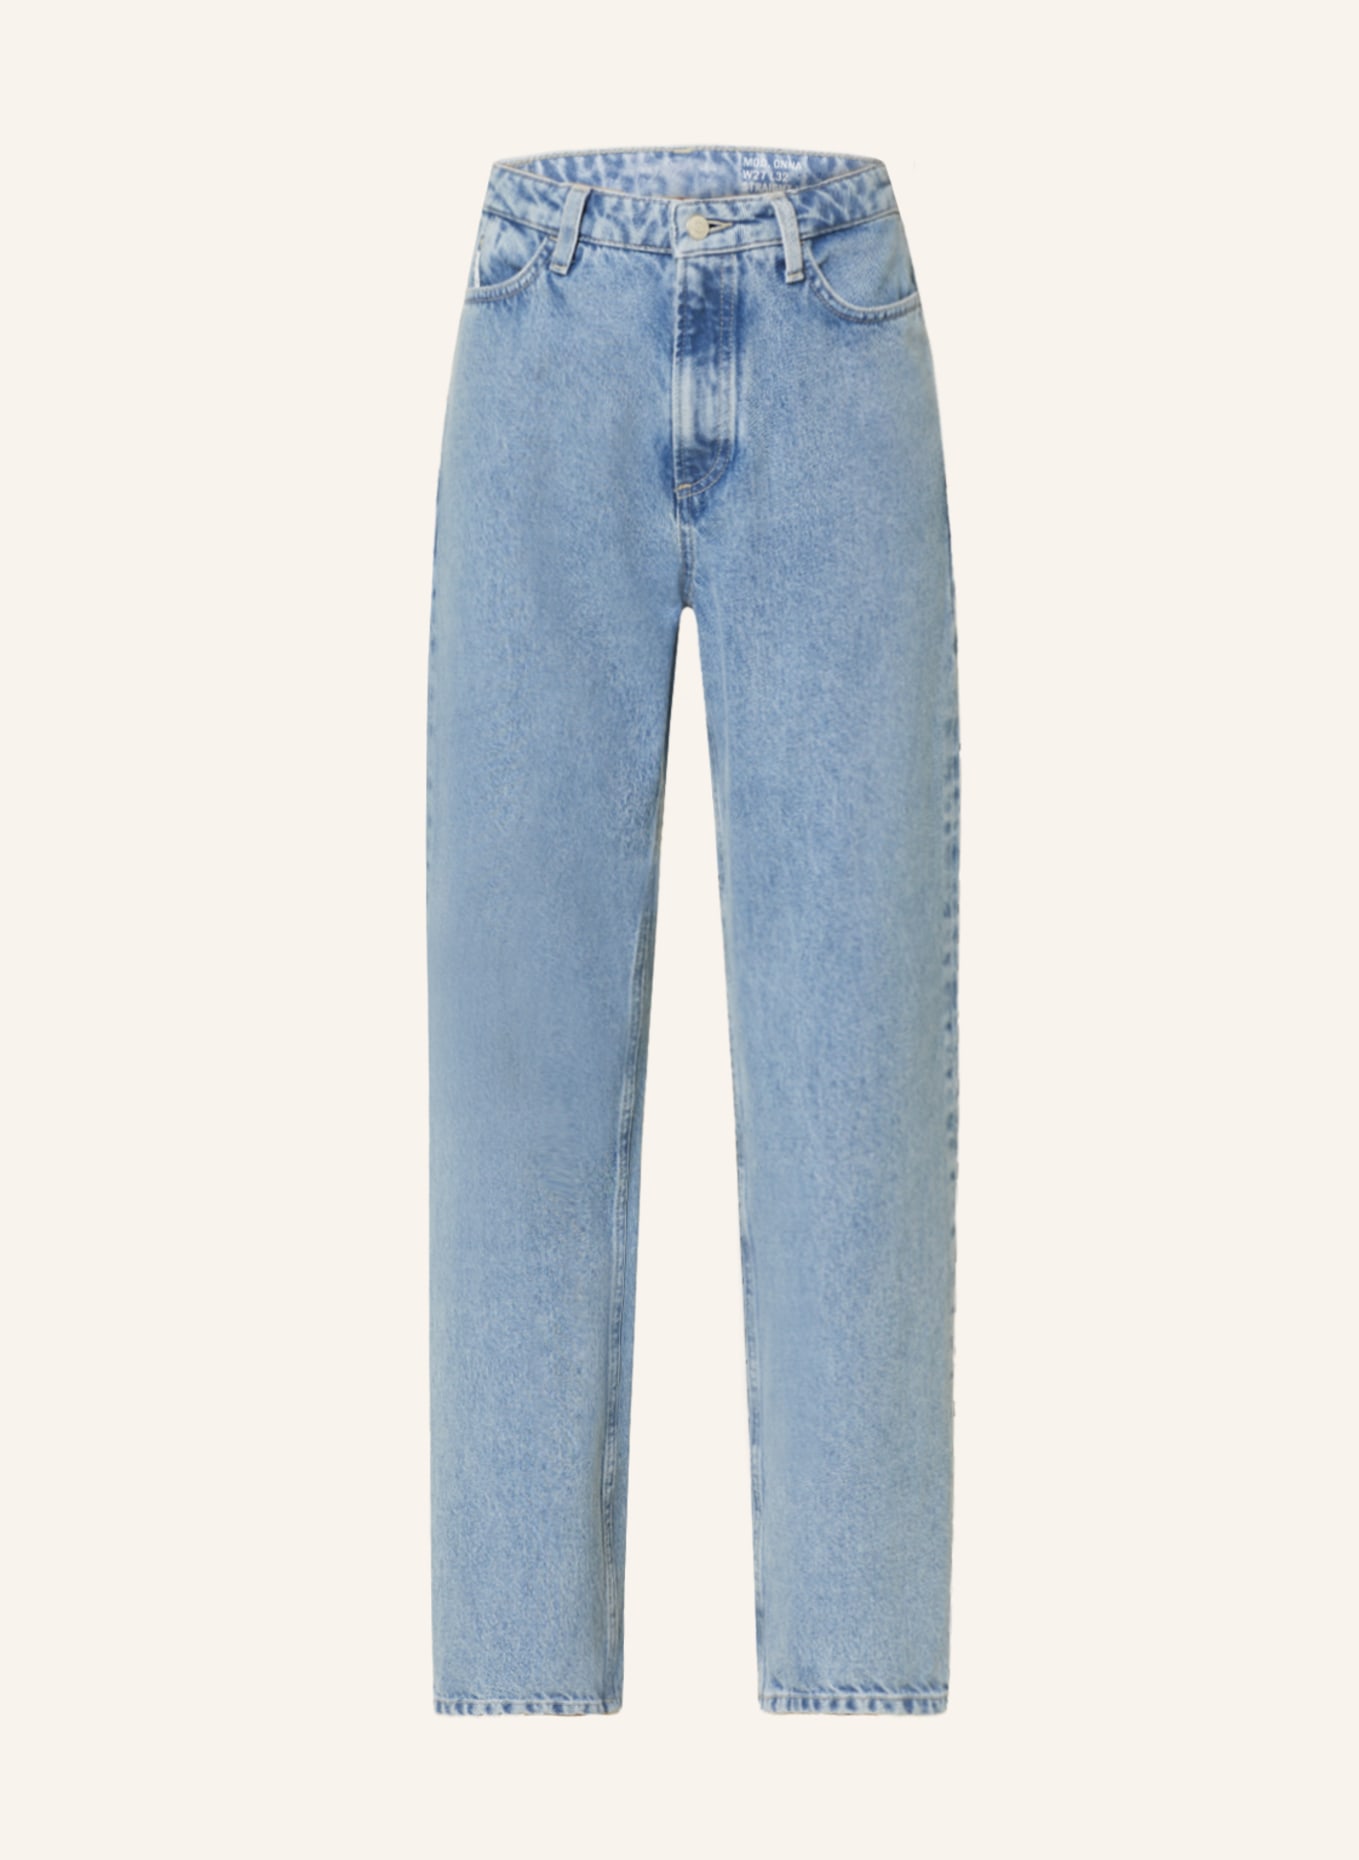 Marc O'Polo DENIM Straight Jeans, Farbe: Q15 multi/vintage light blue marbl (Bild 1)